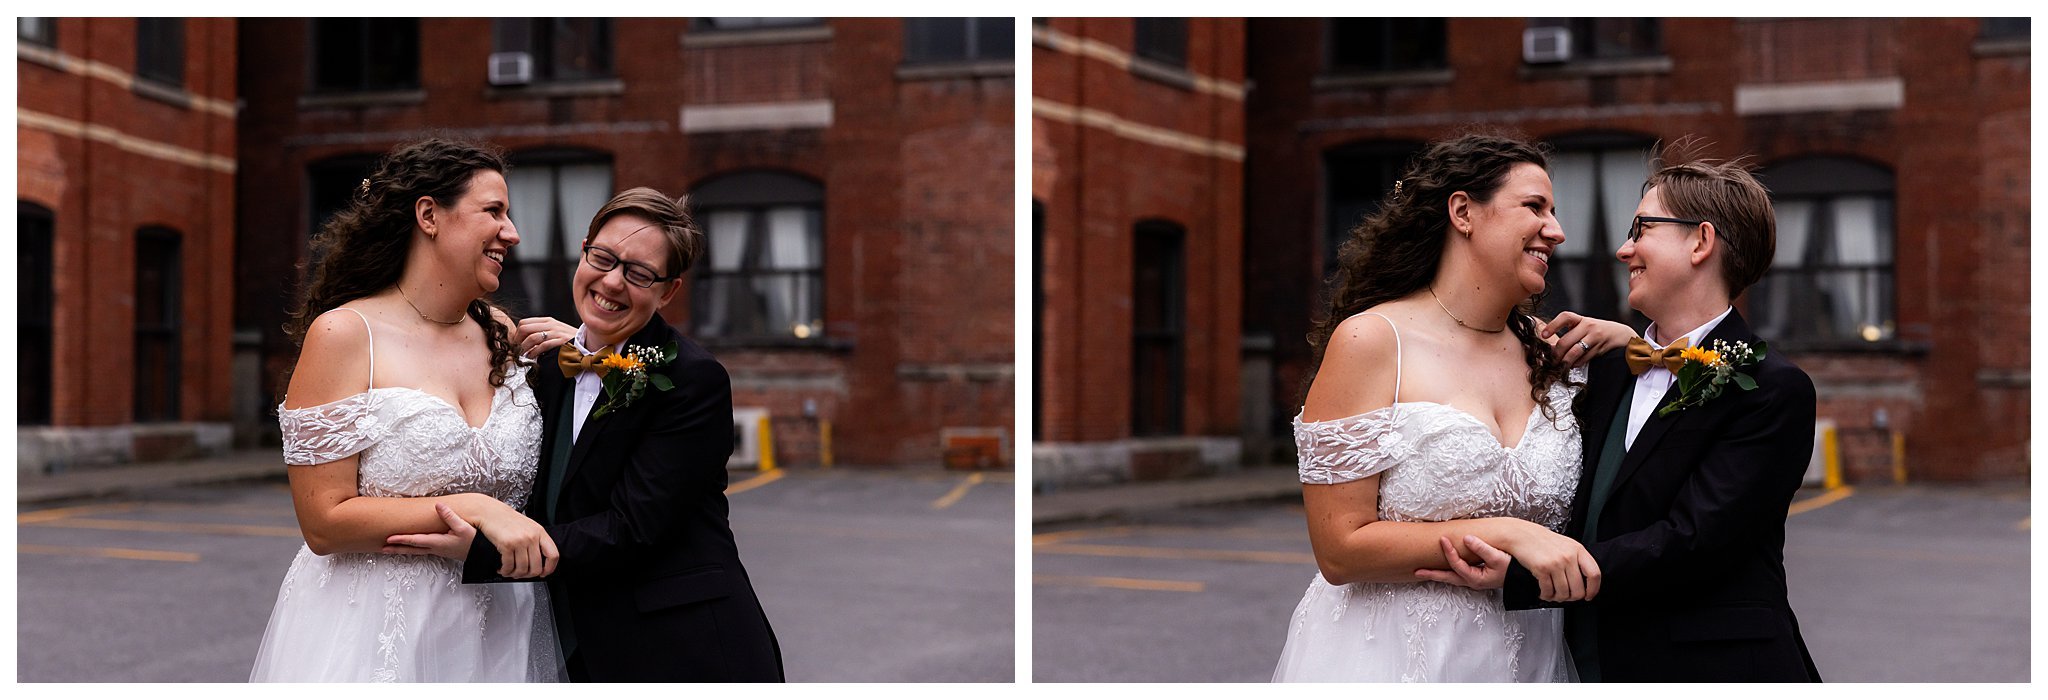 Angela Sabz Queer Fall Wedding Montreal_0061.jpg